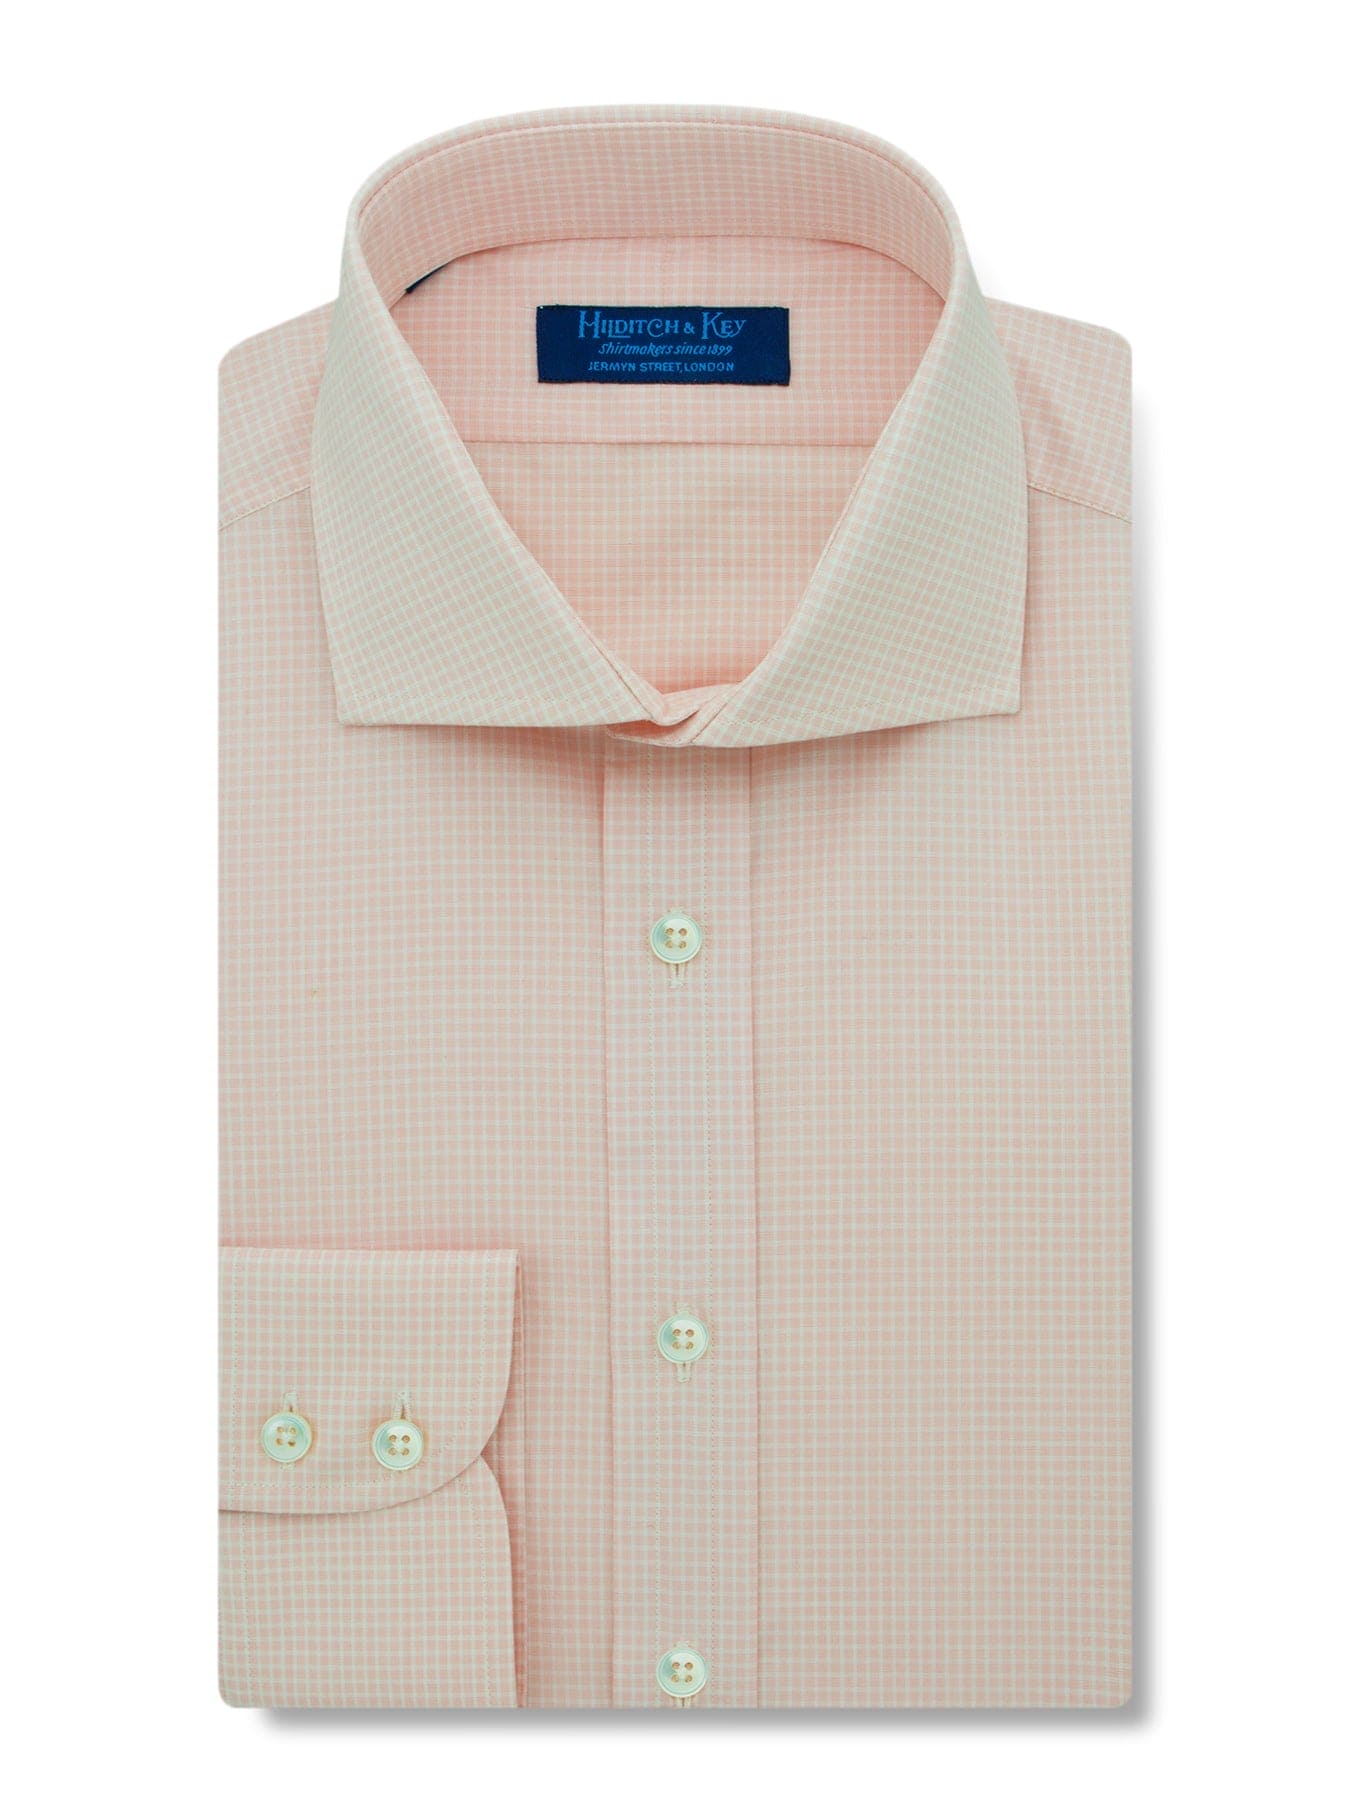 Contemporary Fit, Cutaway Collar, Two Button Cuff in Orange & White Check